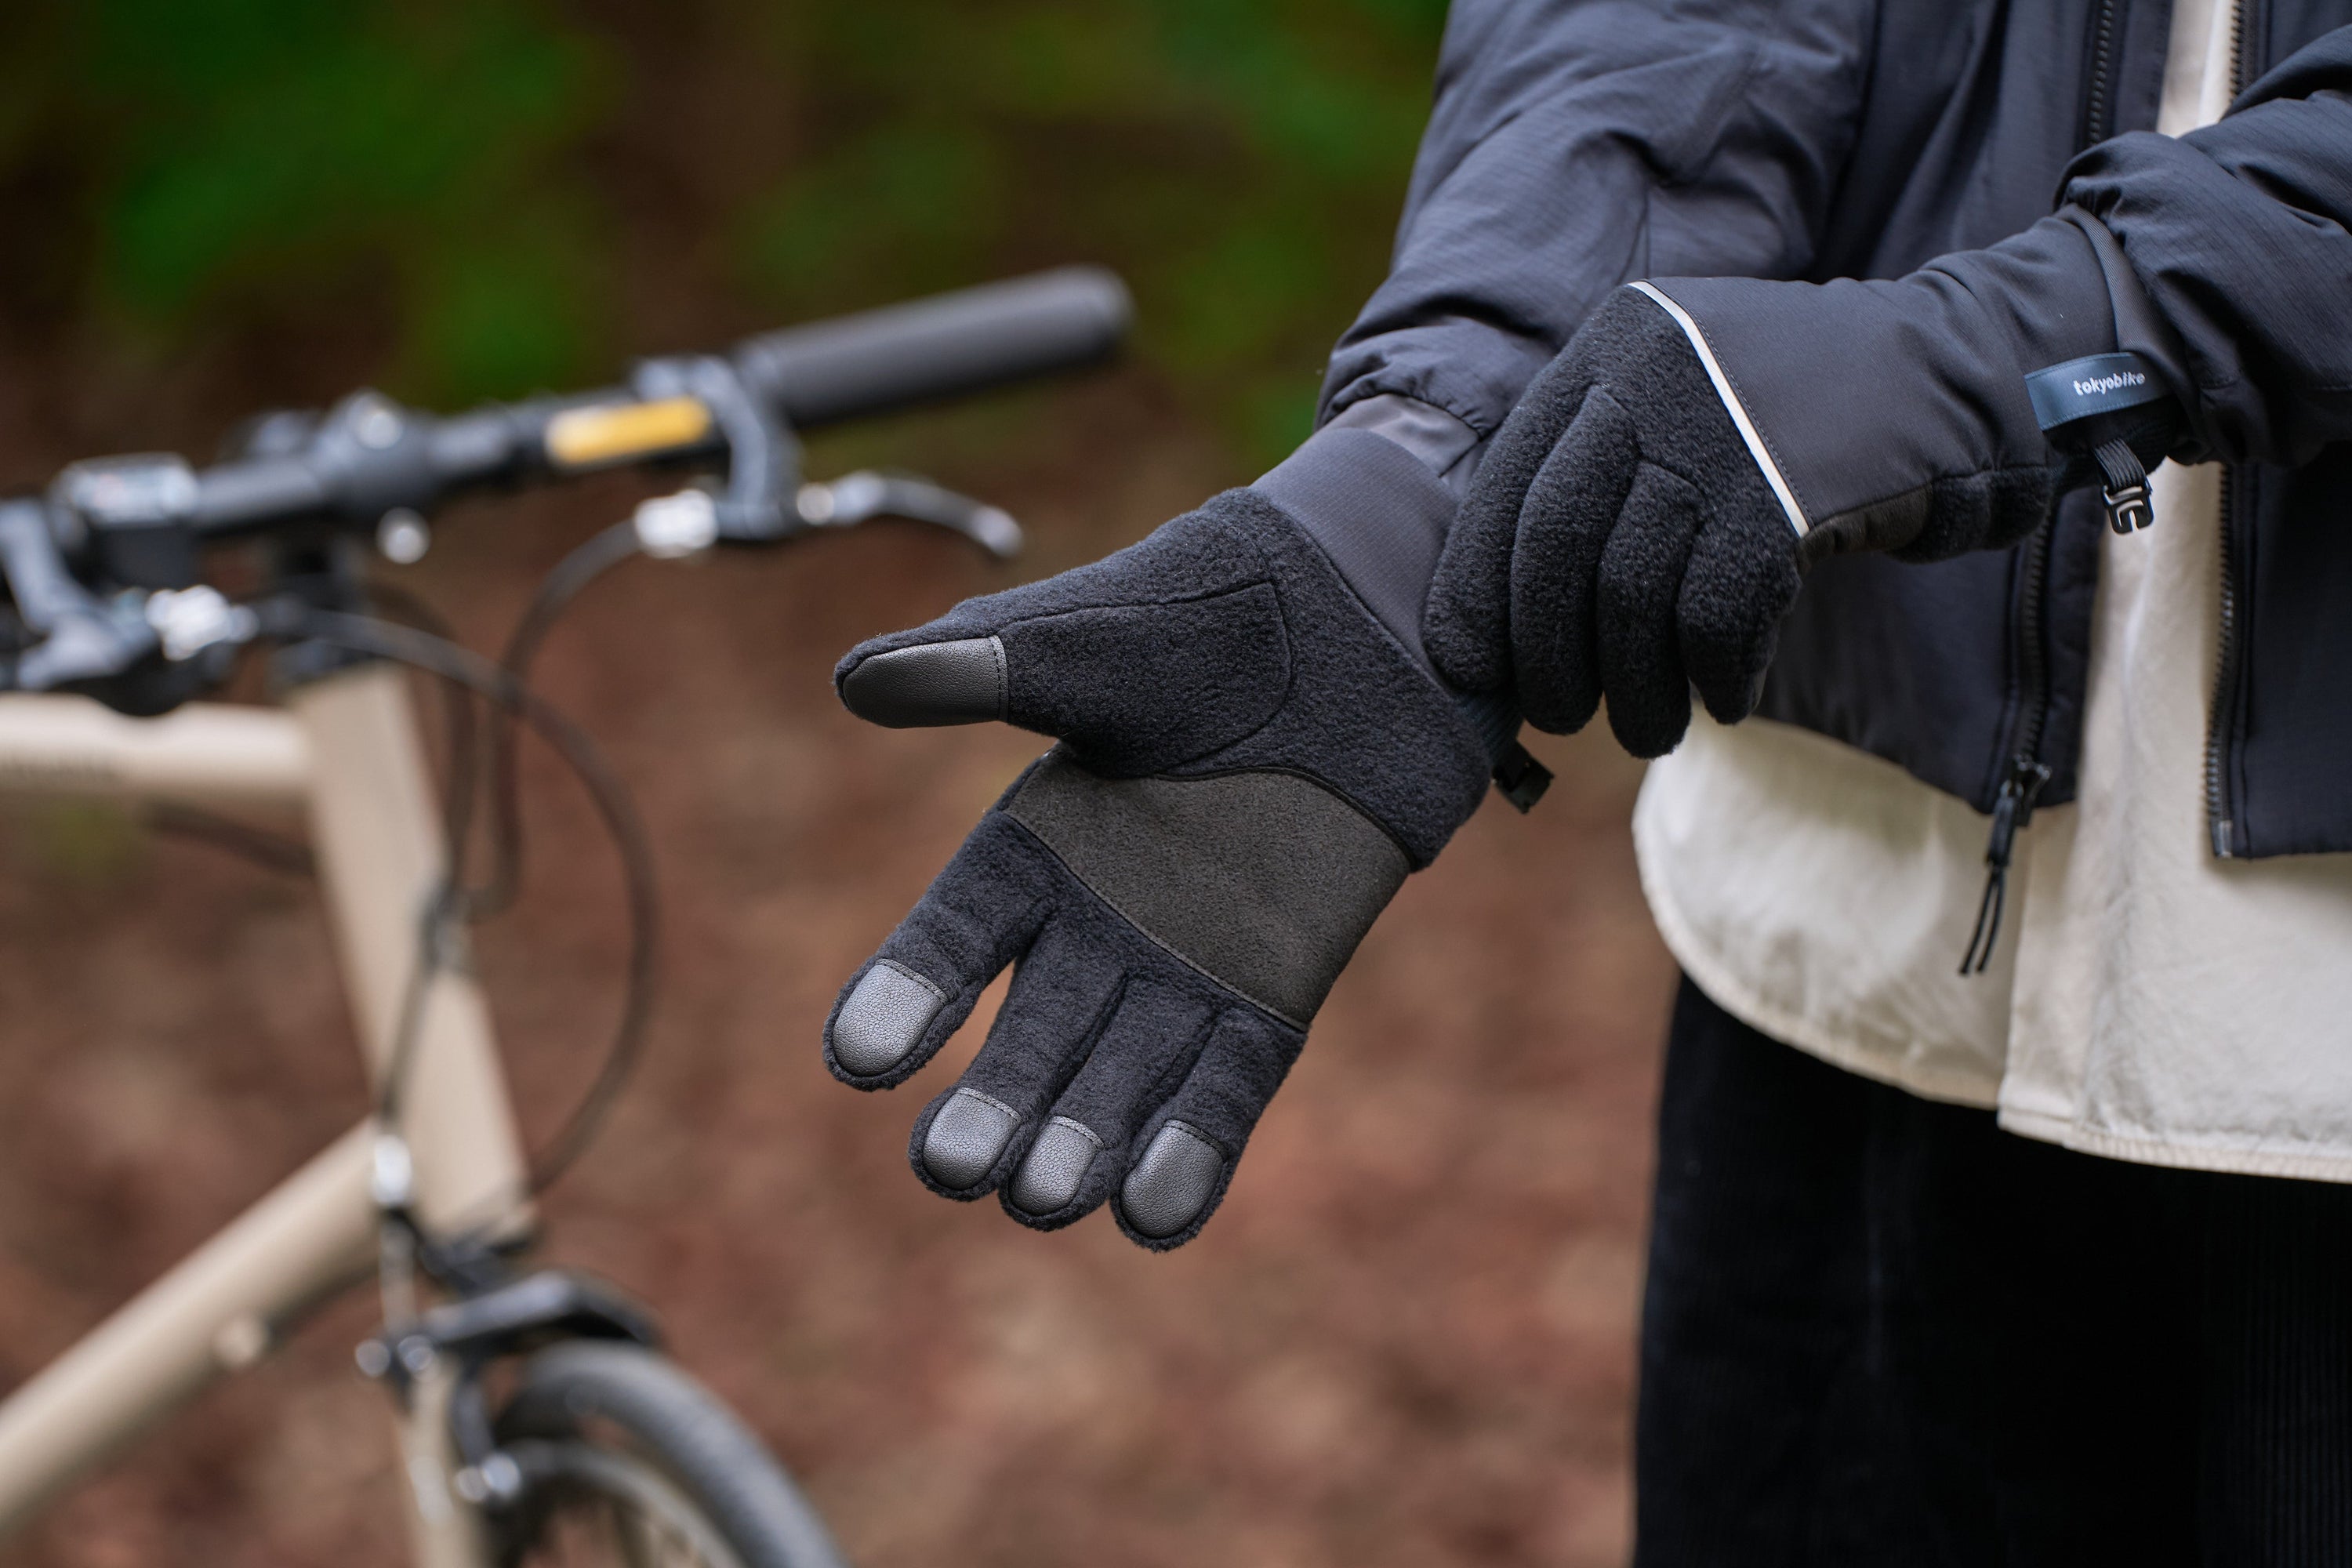 tokyobike + tet. commuter gloves MEDIUM black